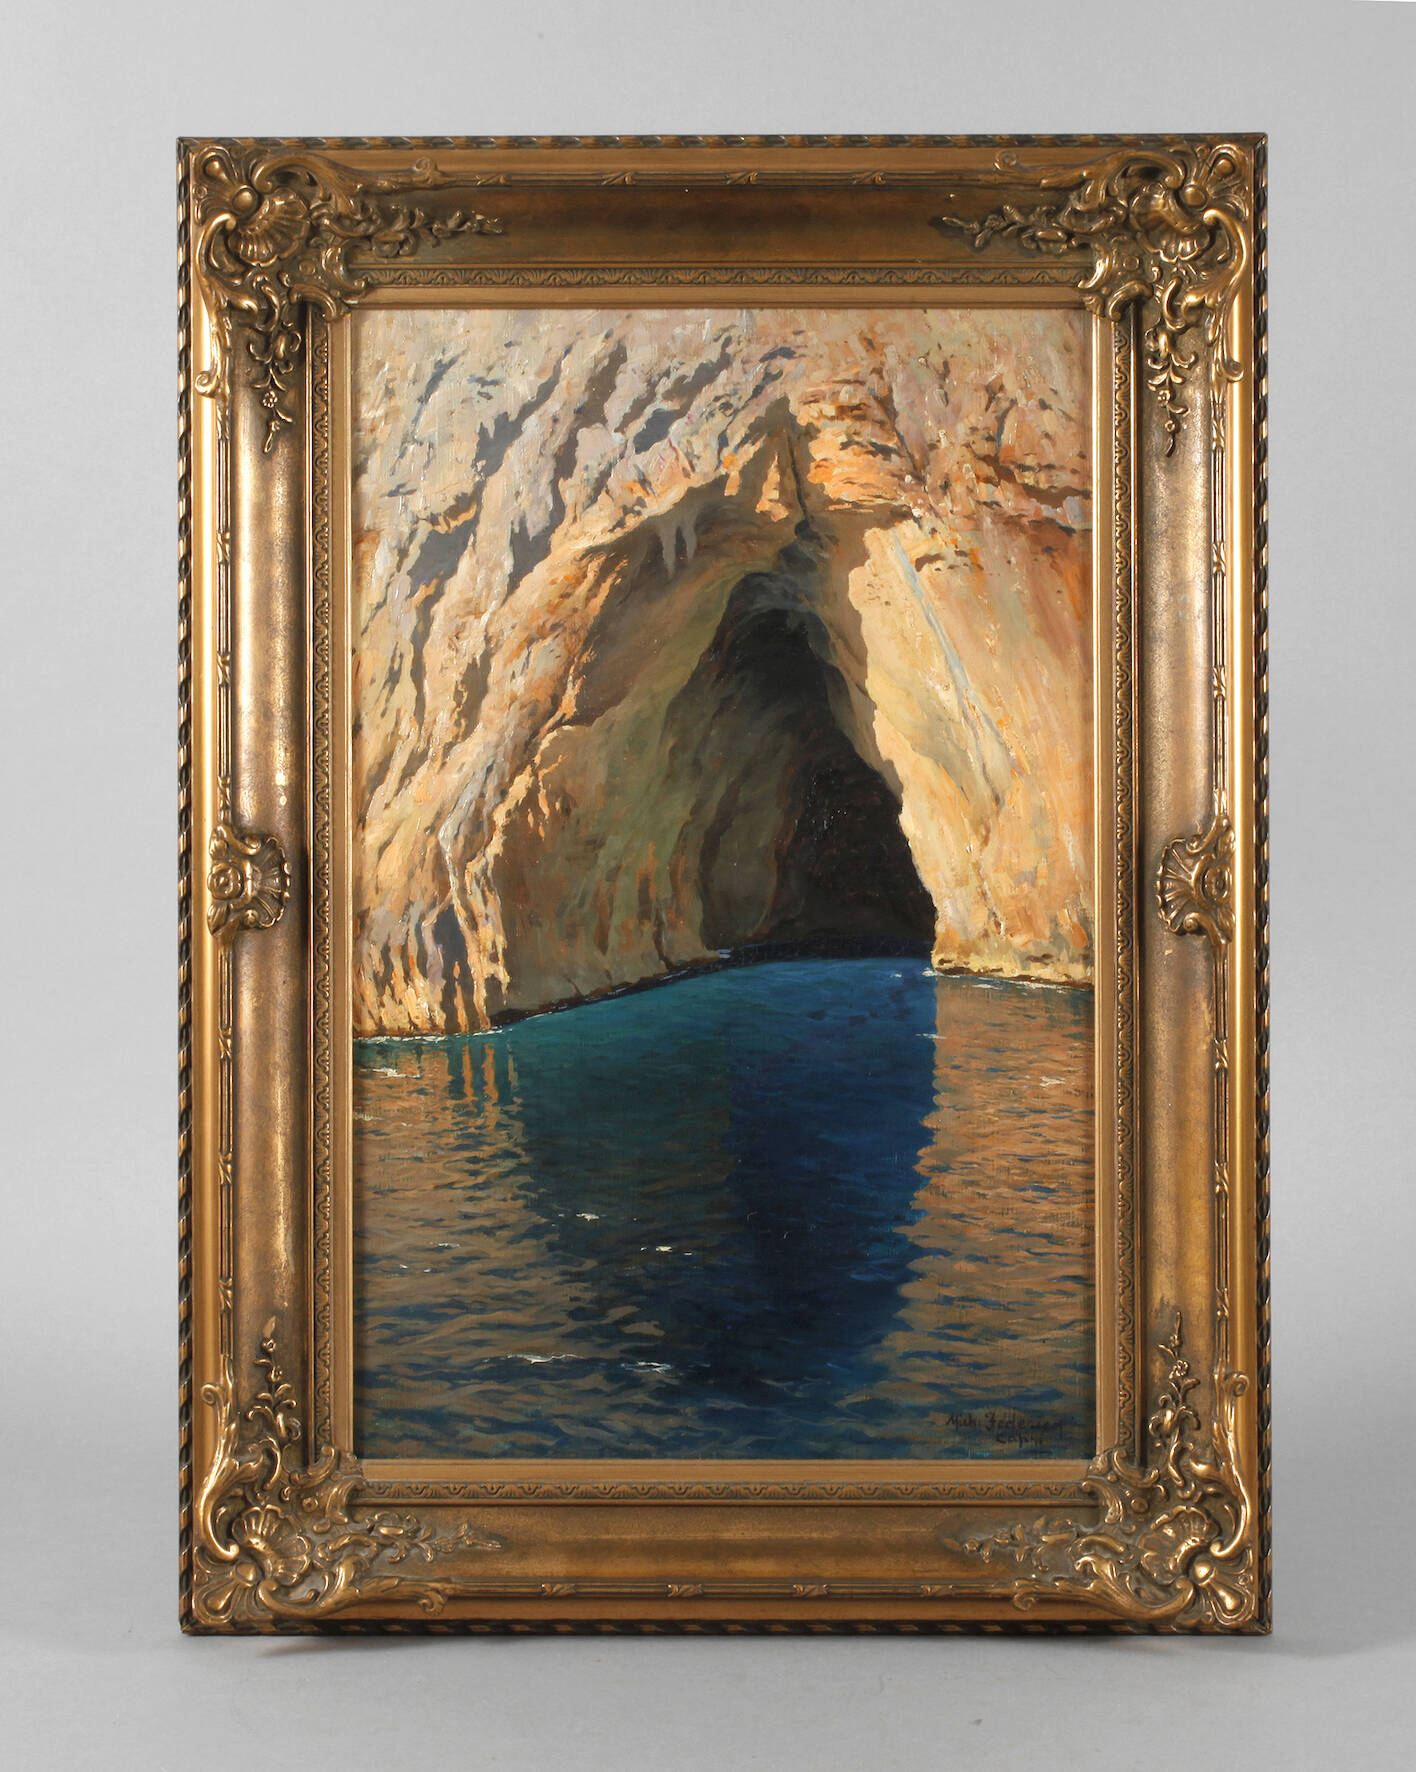 Michele Federico, "Grotta dei Marinai" auf Capri